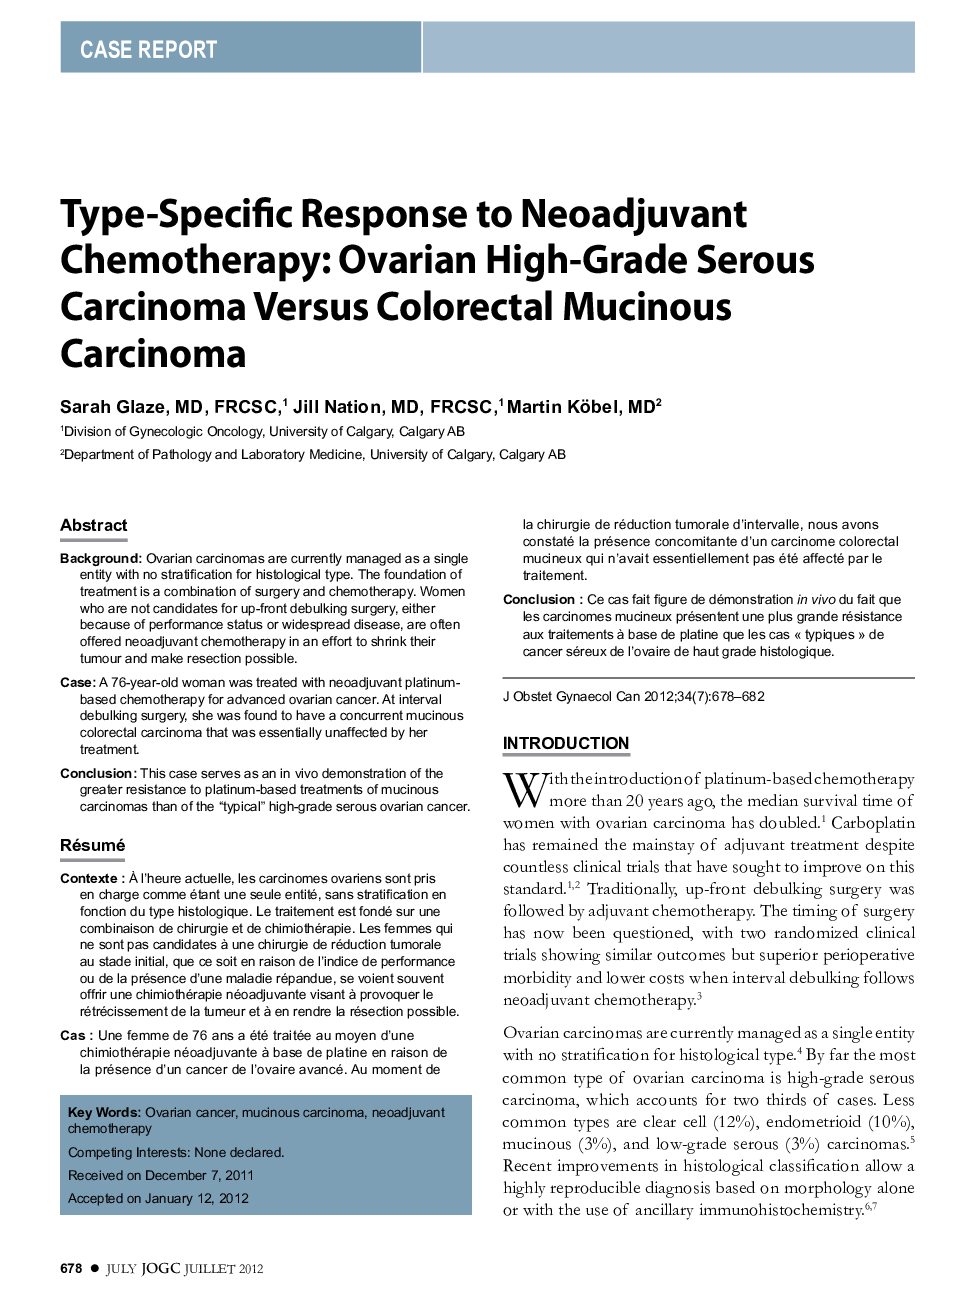 Type-Specific Response to Neoadjuvant Chemotherapy: Ovarian High-Grade Serous Carcinoma Versus Colorectal Mucinous Carcinoma